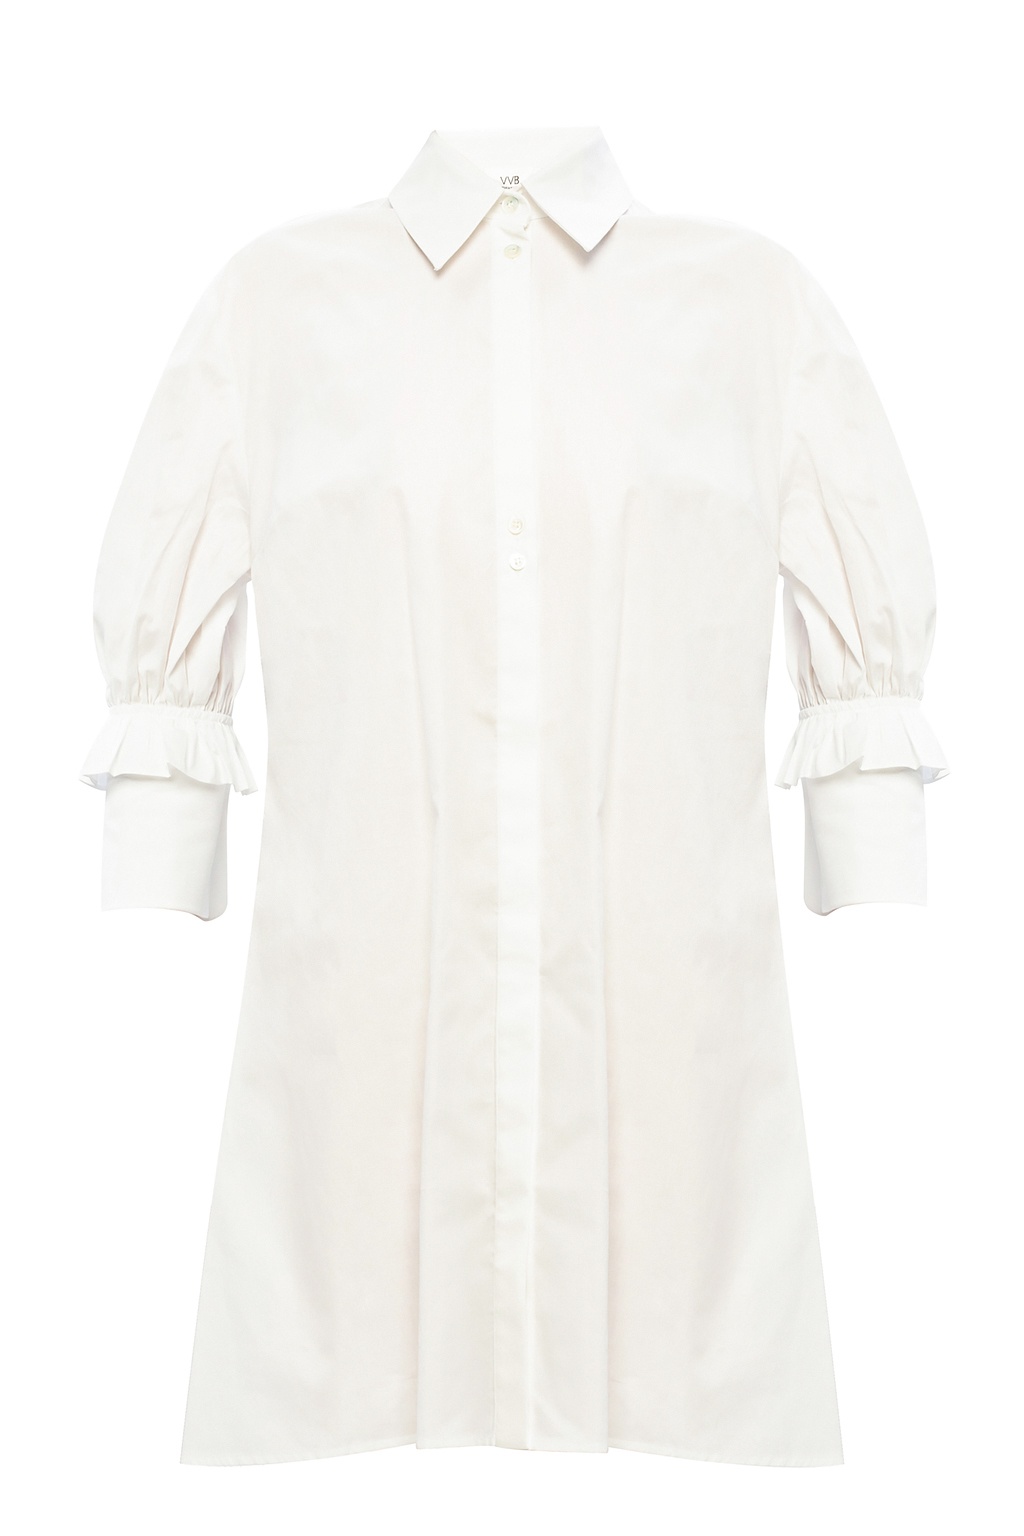 white shirt dress canada